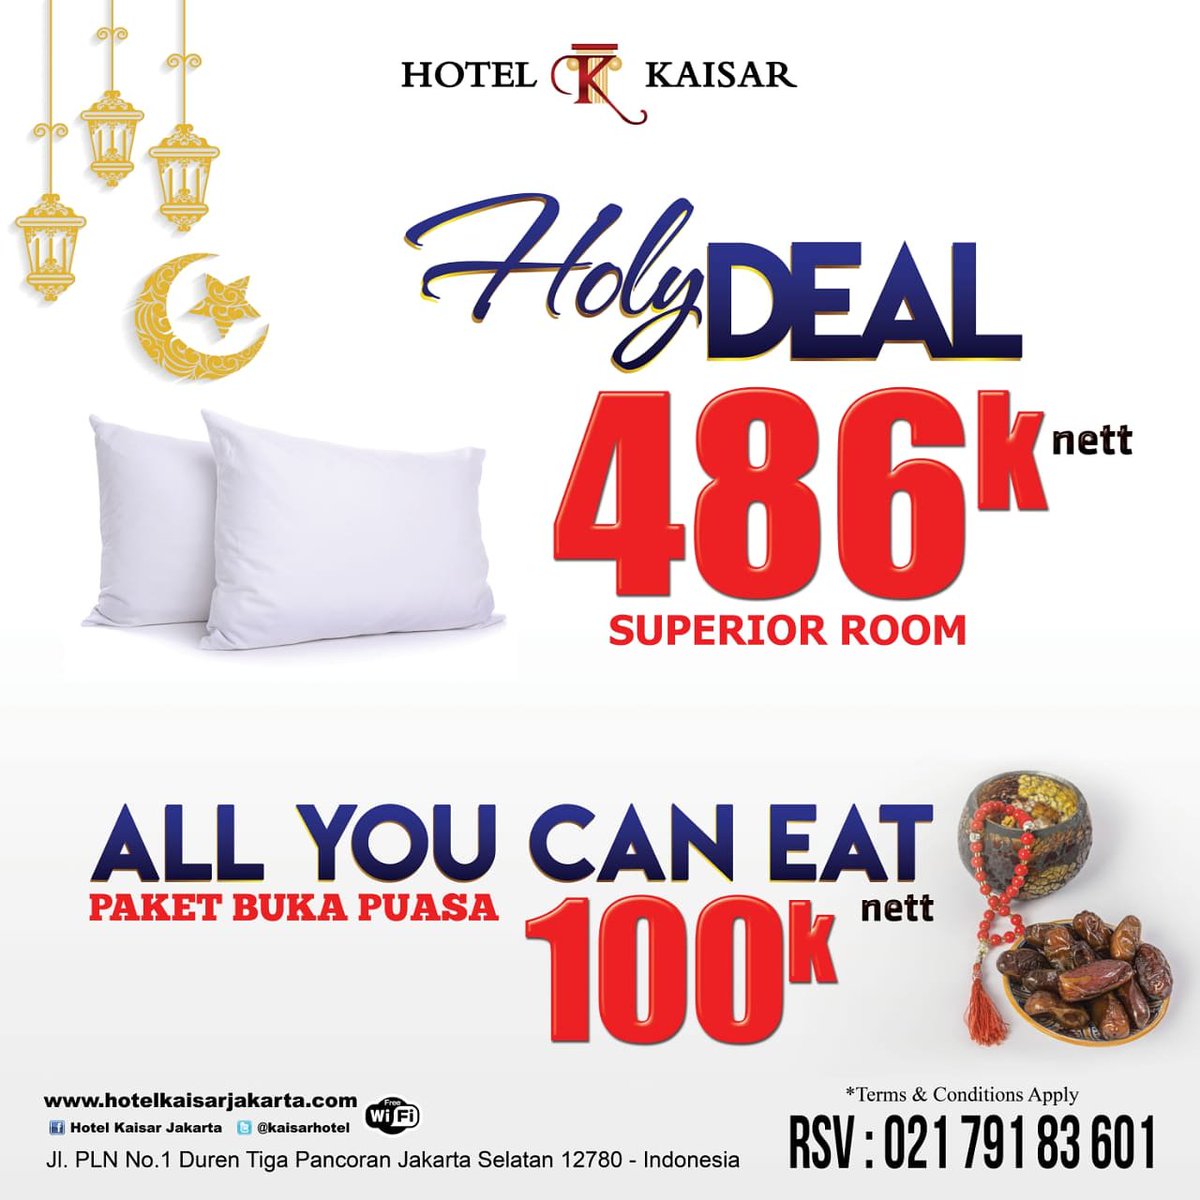 Room Promo Holy Deal and promo bukber All You Can Eat in Hotel Kaisar Jakarta.
Thank you
Direct Booking WhatsApp 0812-9933-9493
Phone : 021-79183601
#bukber
#bukberhotel 
#bukberkeluarga
#bukberjaksel
#bukbermurah
#bukberallyoucaneat 
#bukberseru
#bukbernyaman